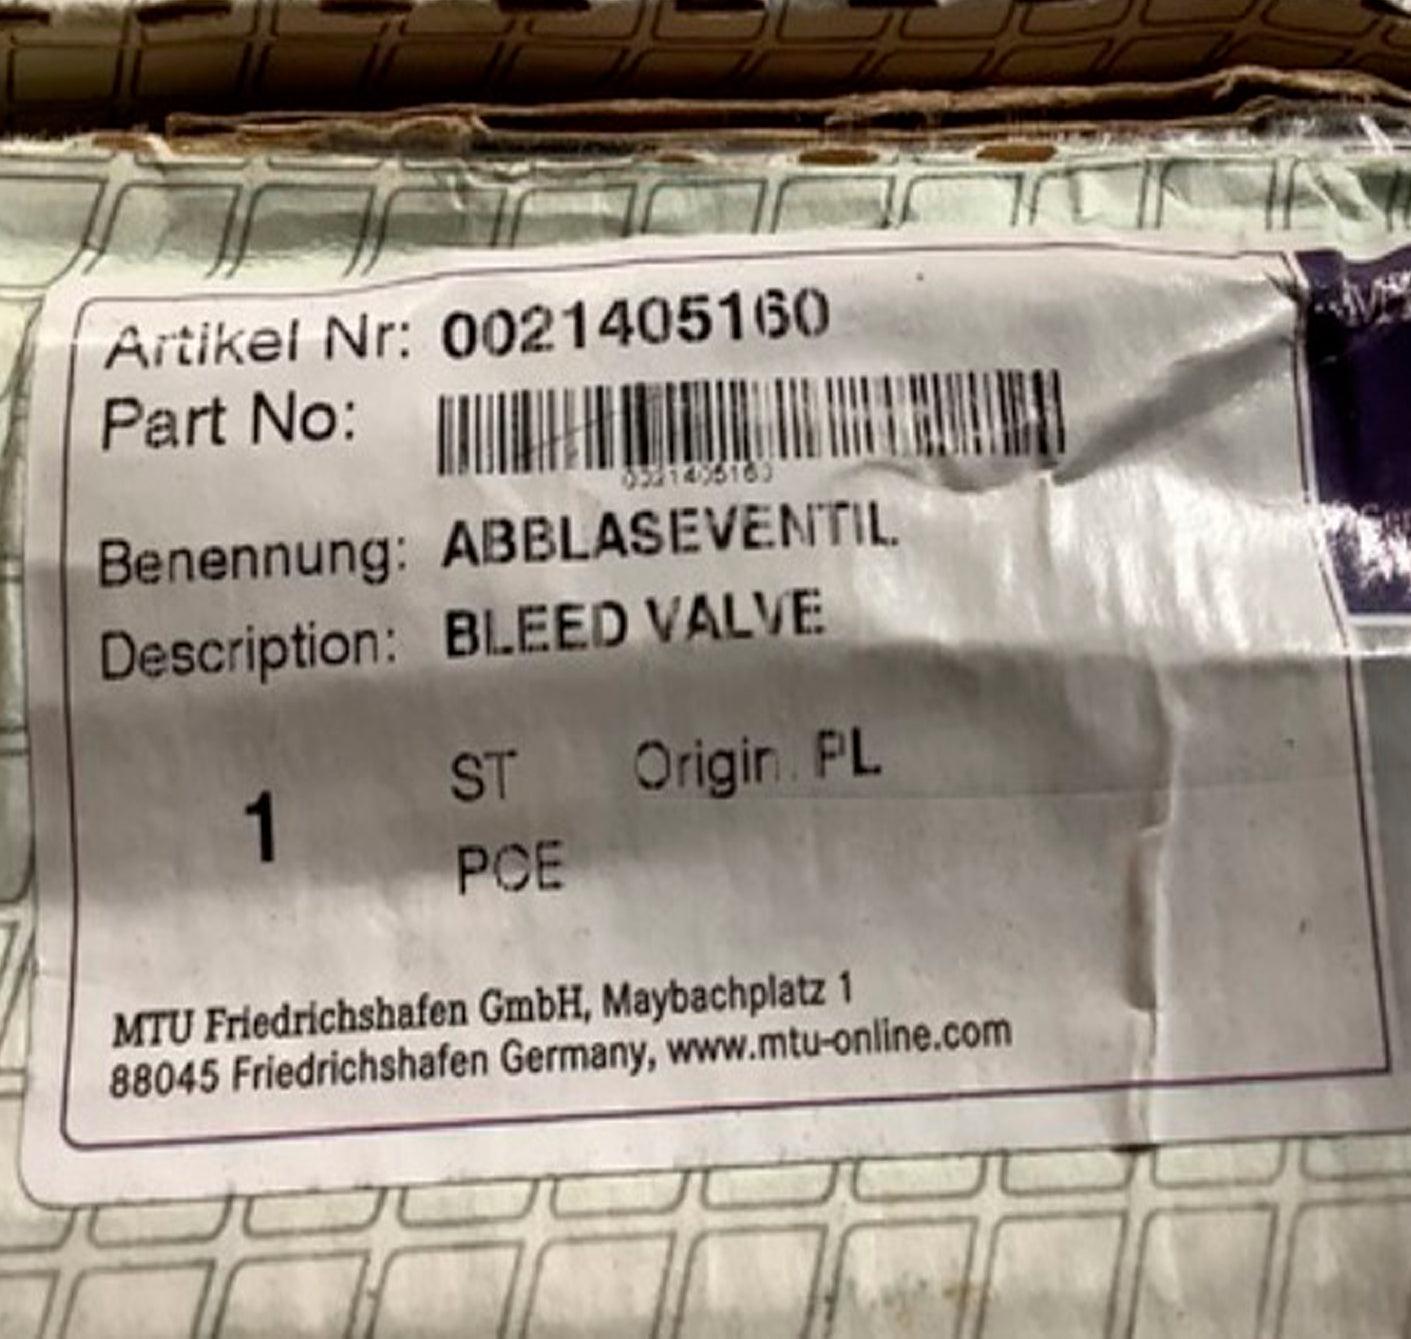 0021405160 Genuine MTU Bleed Valve - ADVANCED TRUCK PARTS